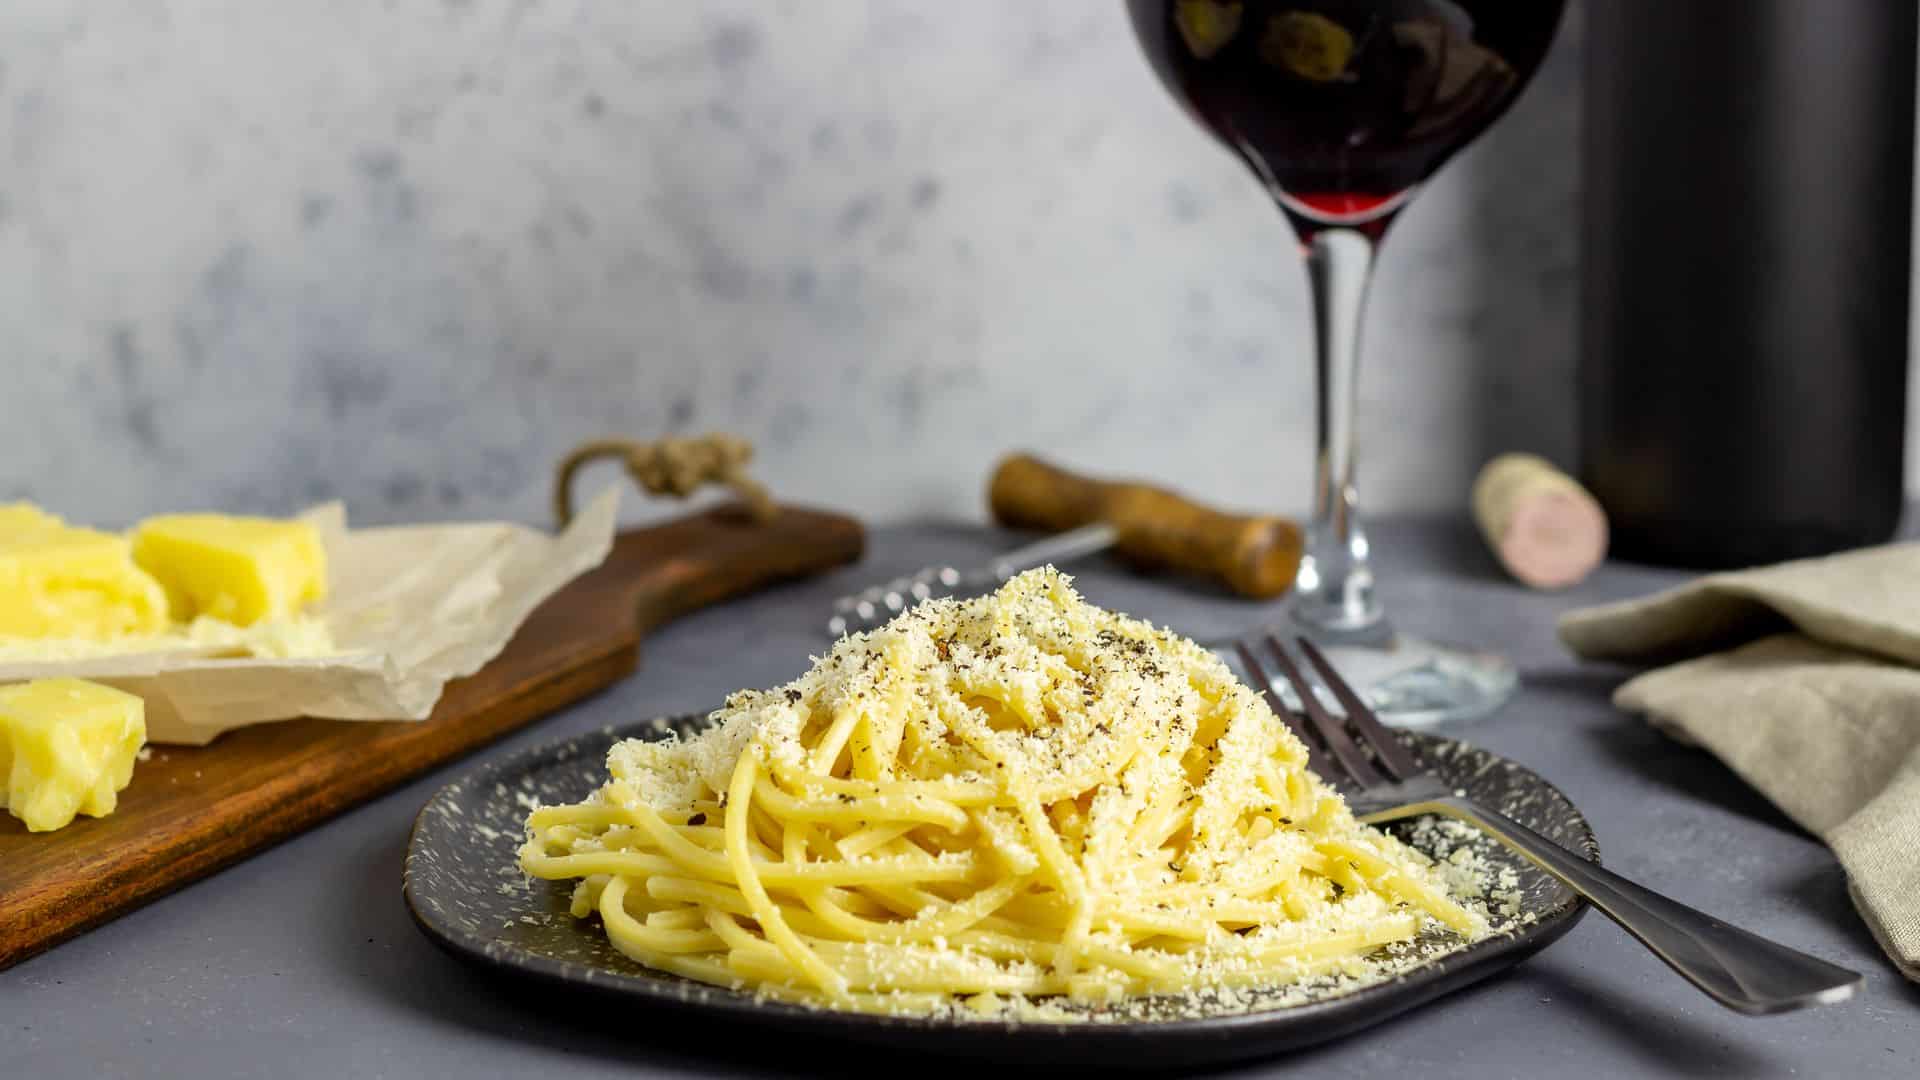 A plate of 'Cacio e Pepe', a Roman pasta dish and a glass of red wine.